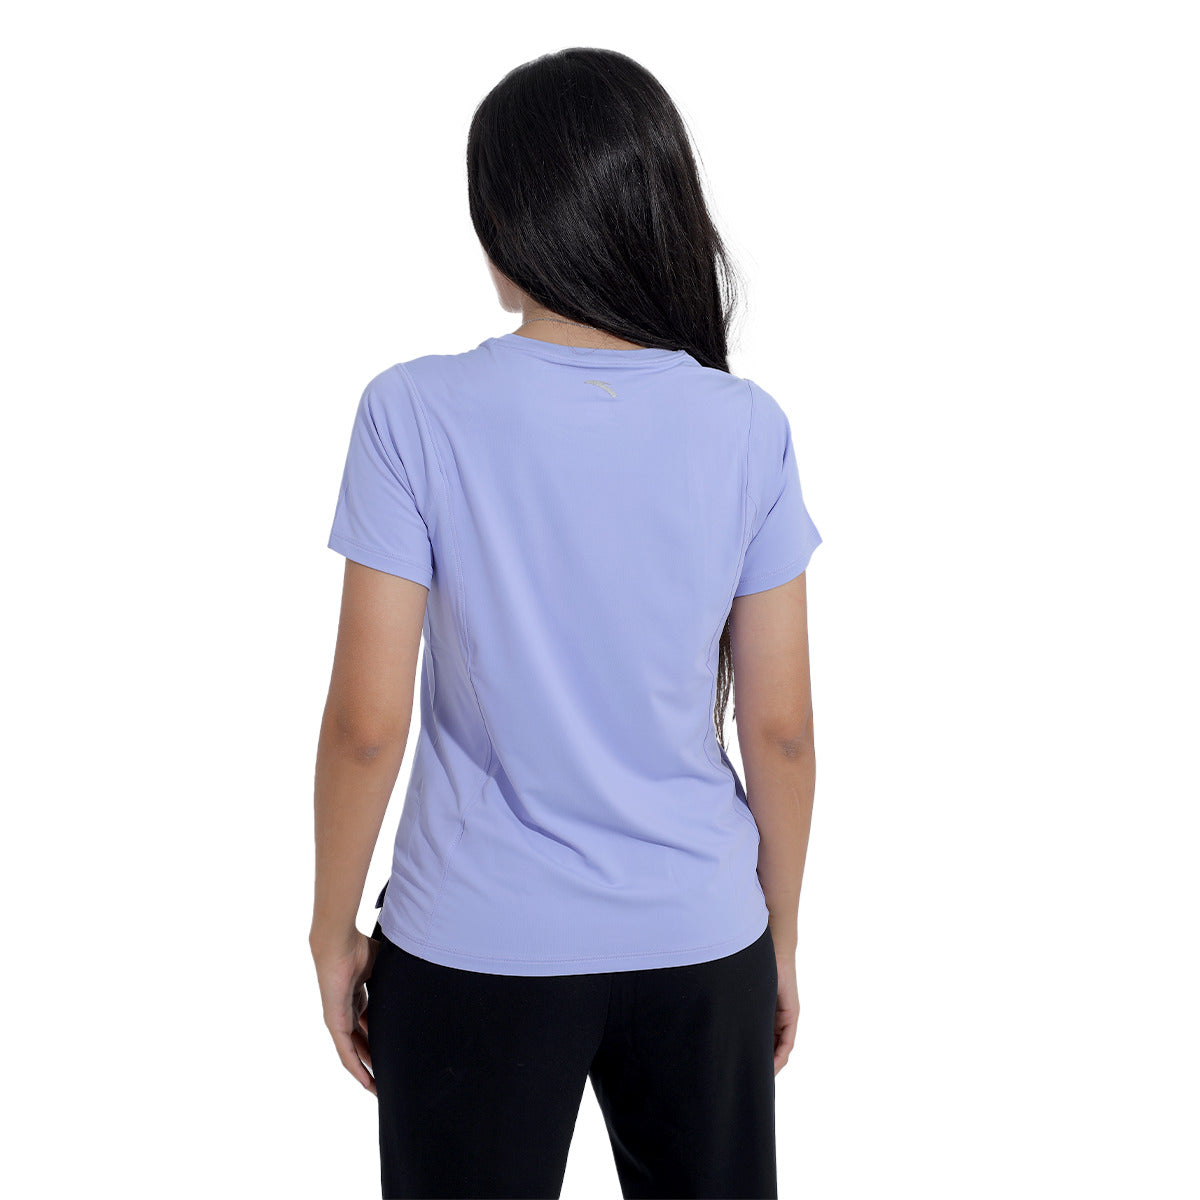 Anta Ss Tee Running T-Shirt For Women, Violet